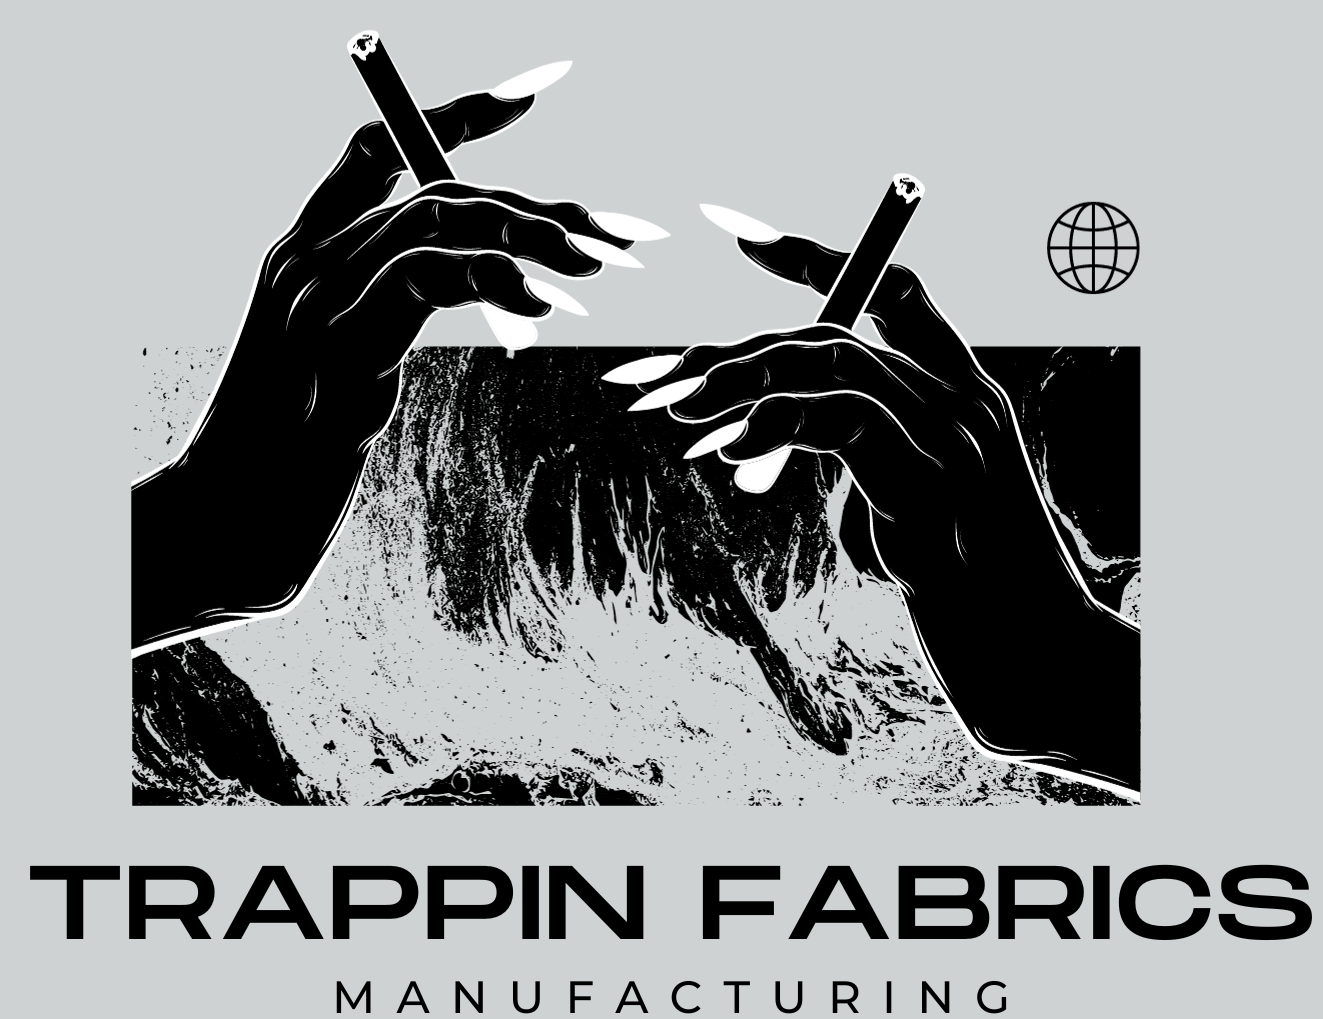 TRAPPIN FABRICS